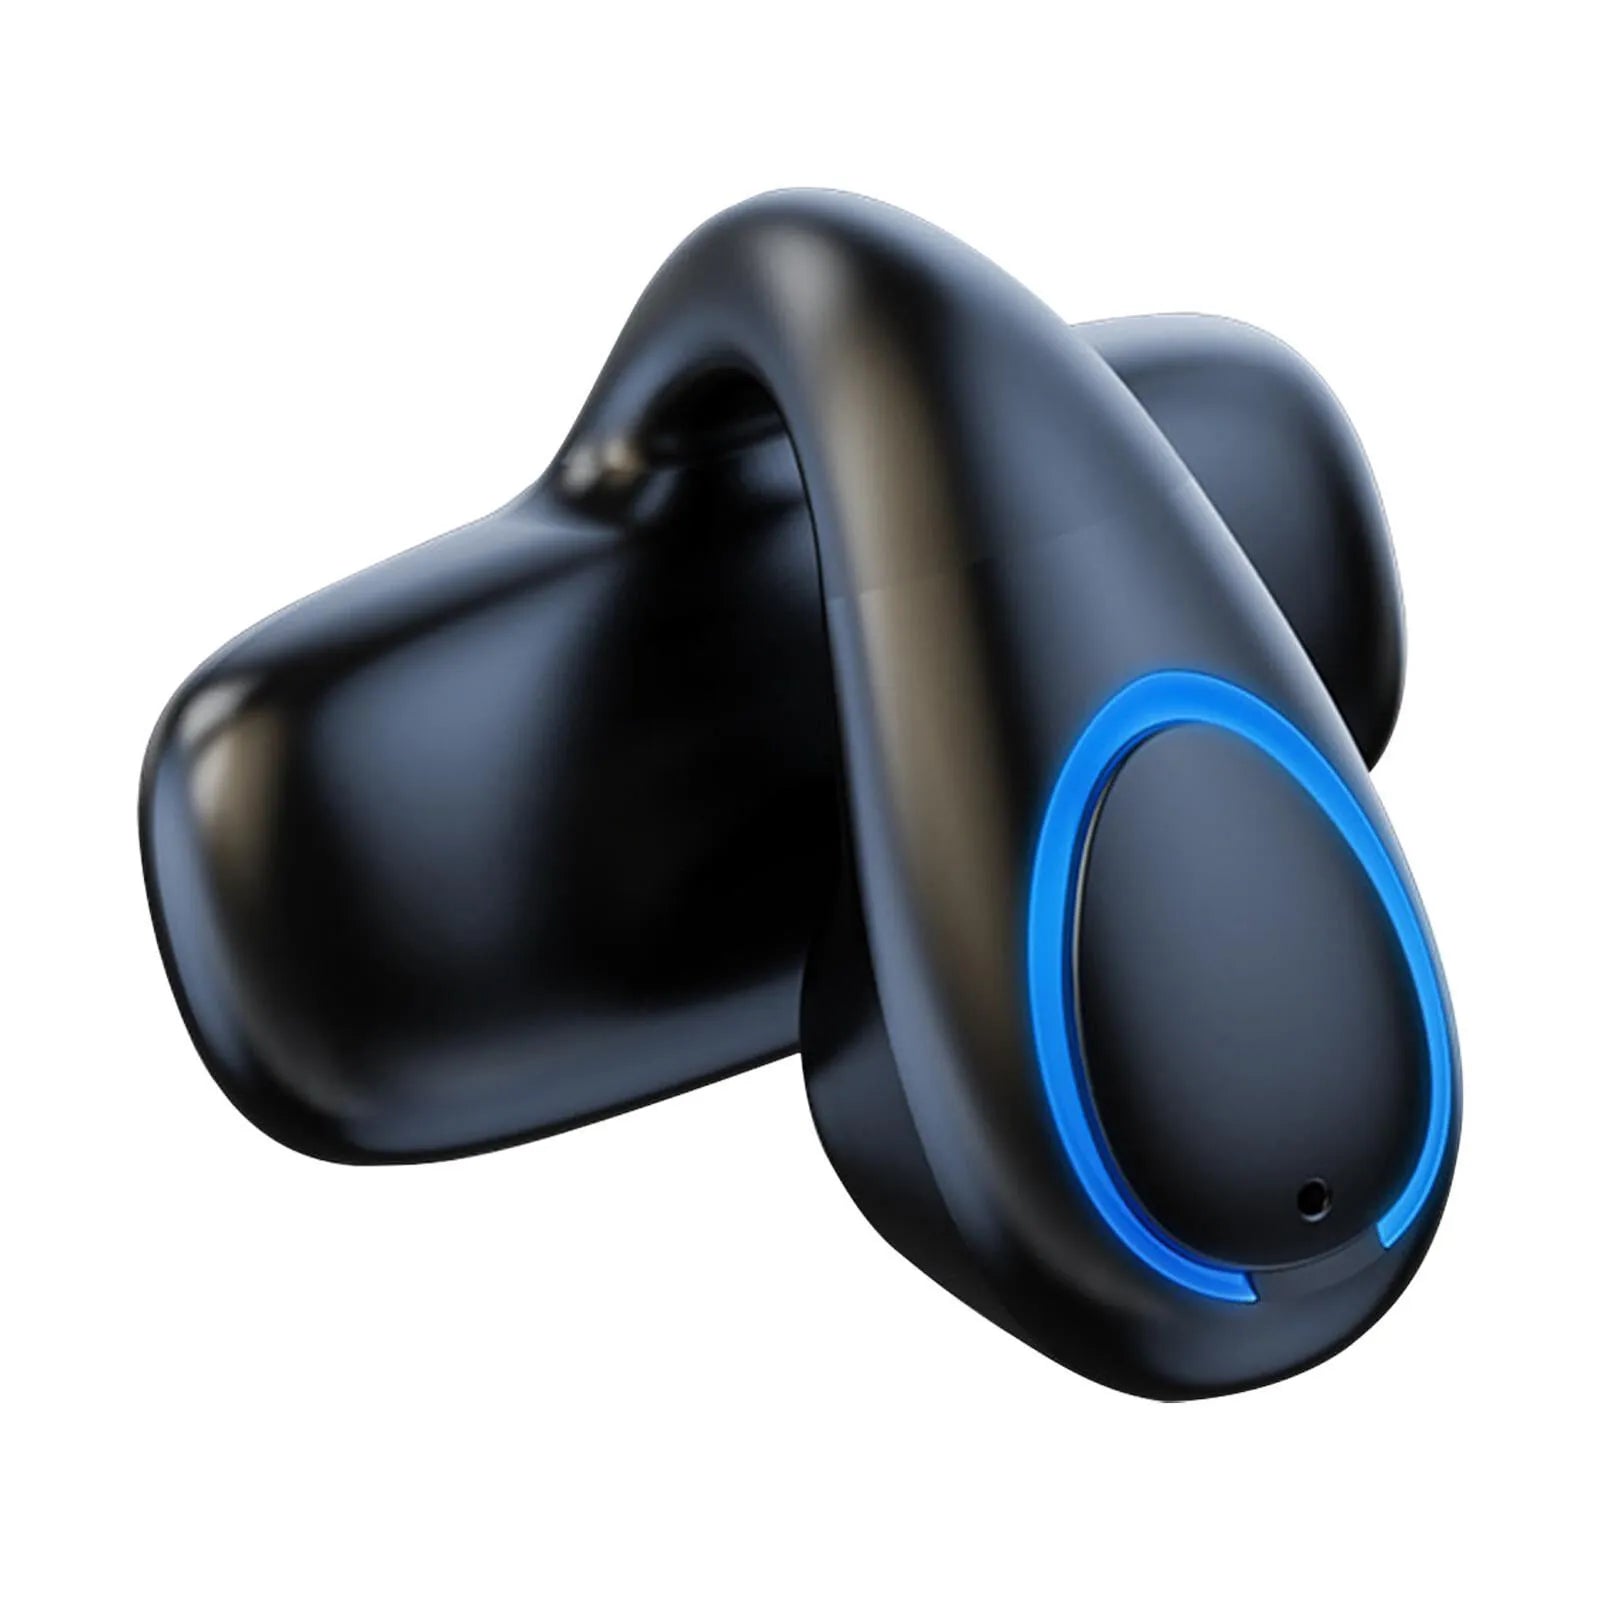 Bluetooth Bone Conduction Earbuds: Unleashing the Future of Wireless Audio